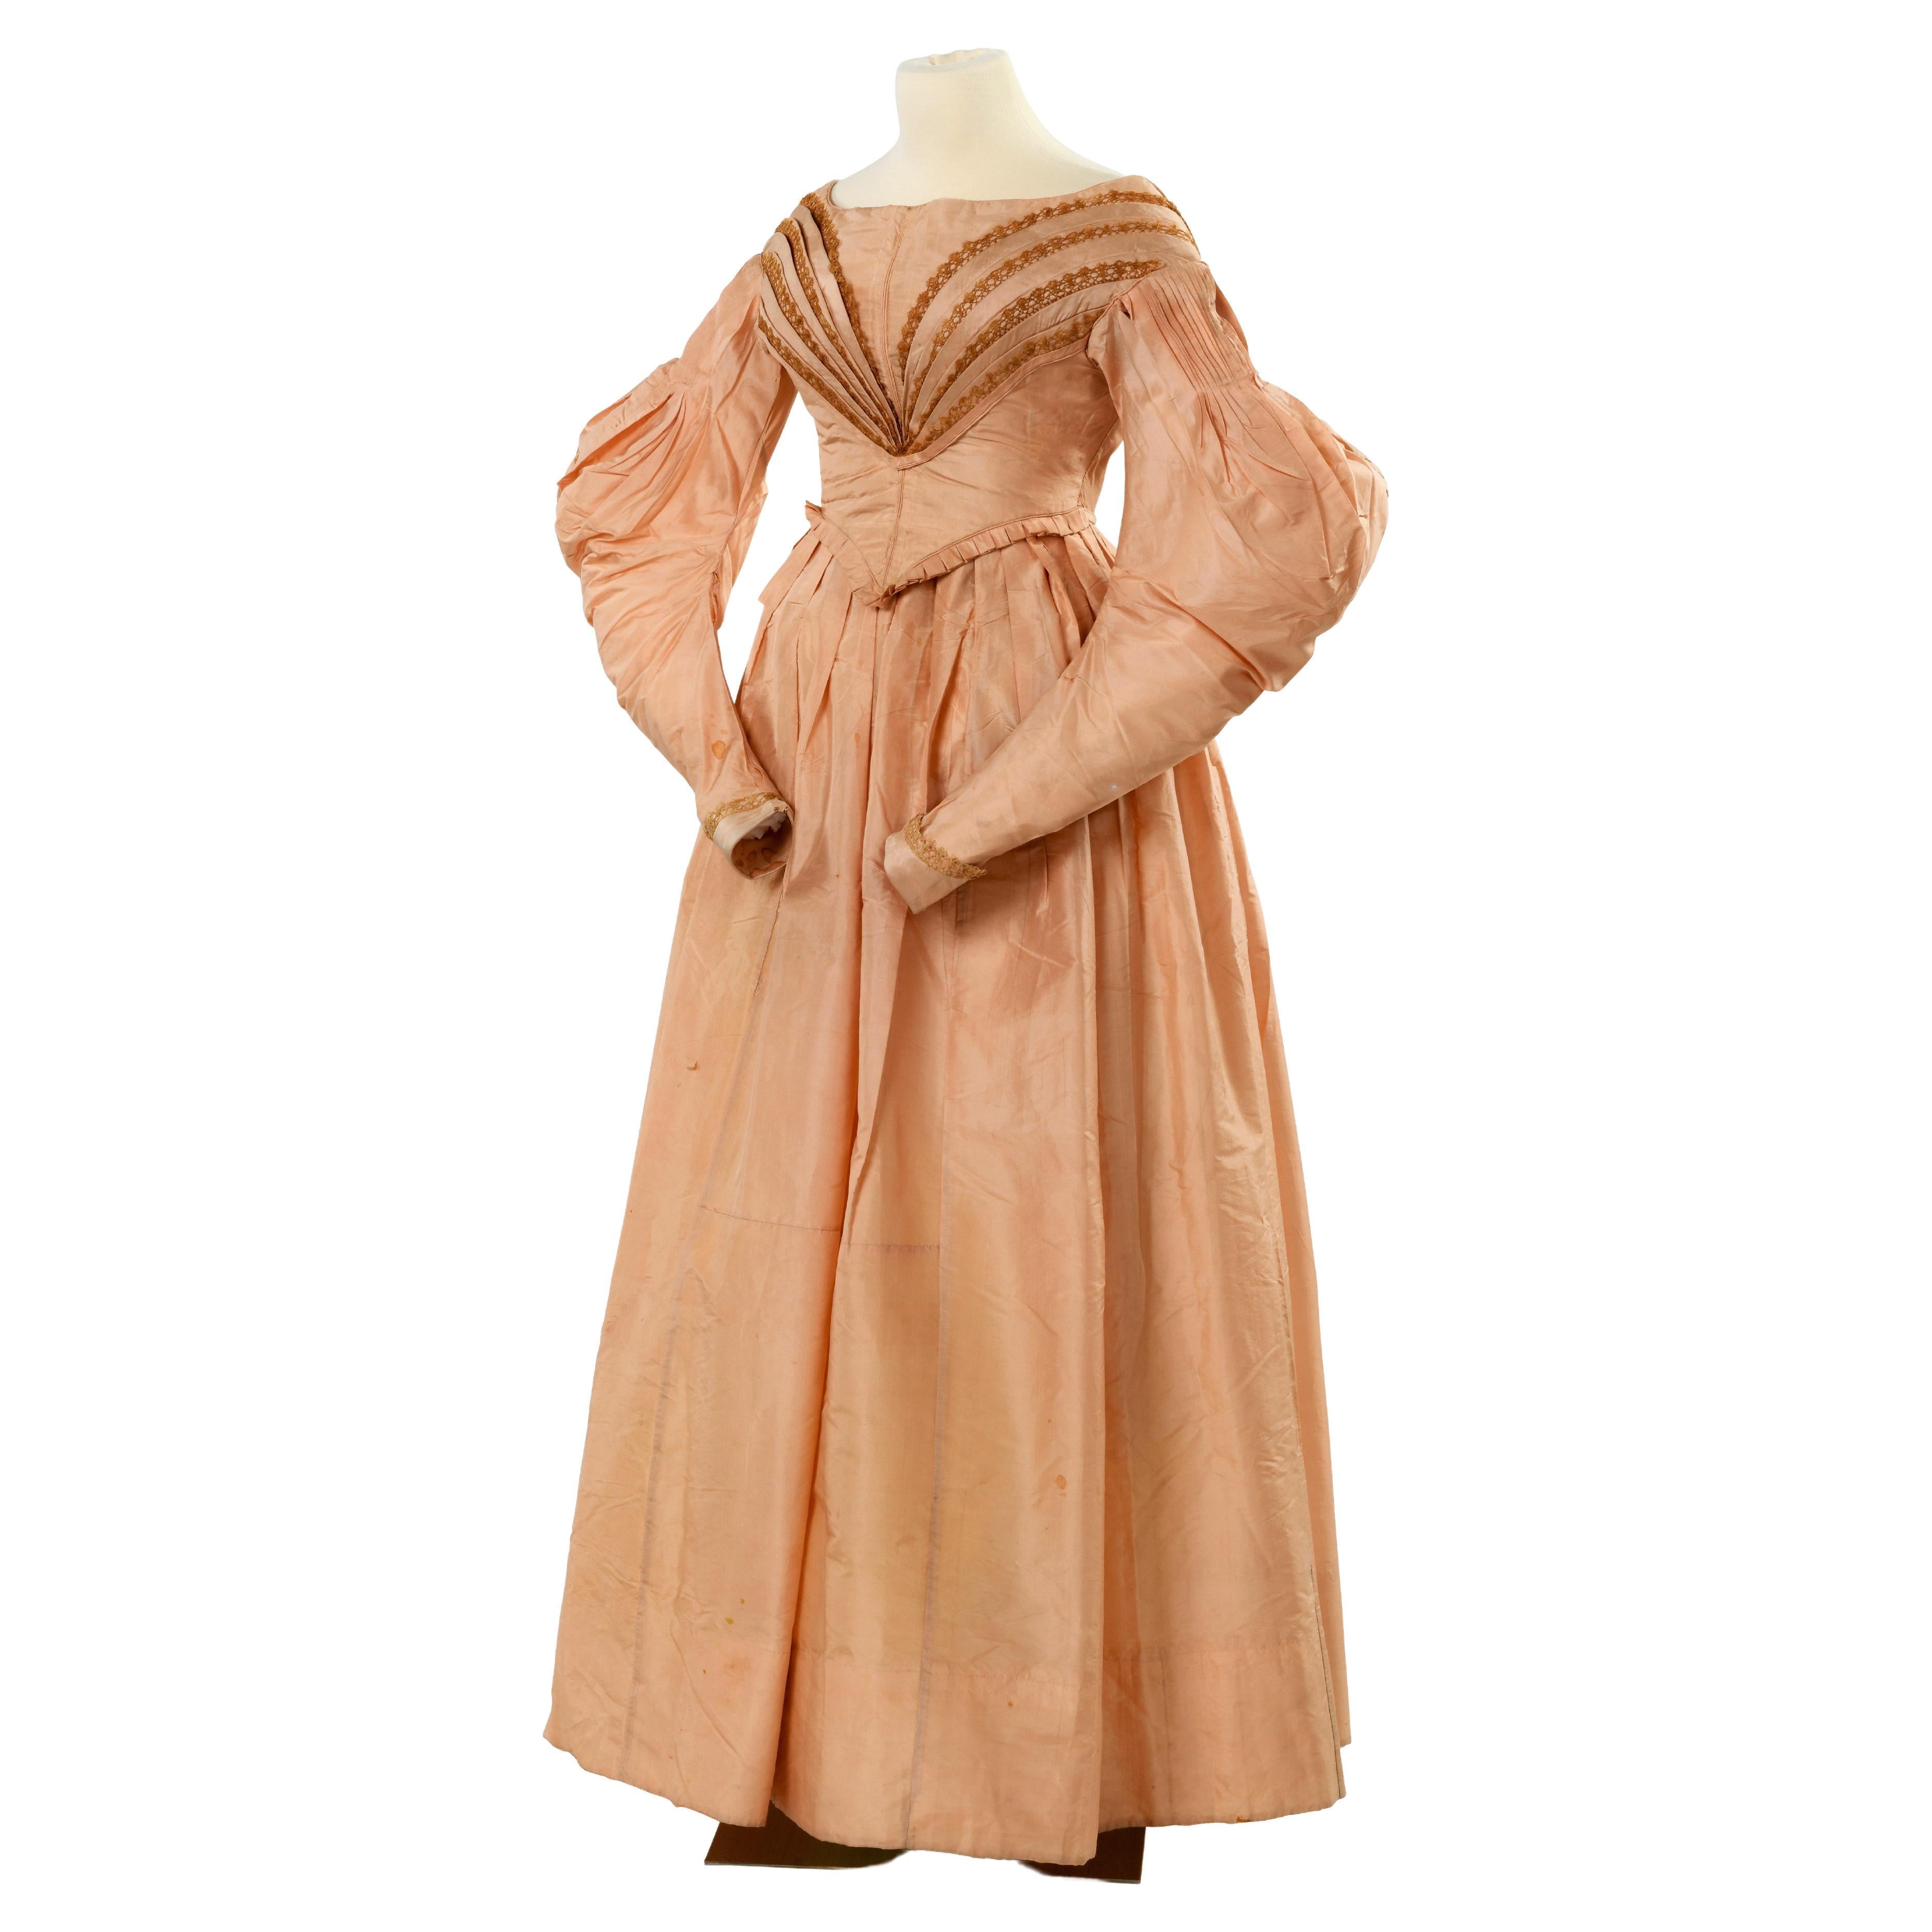 A French Romantic Period taffeta pale pink Taffeta Dress- France Circa 1835-1840